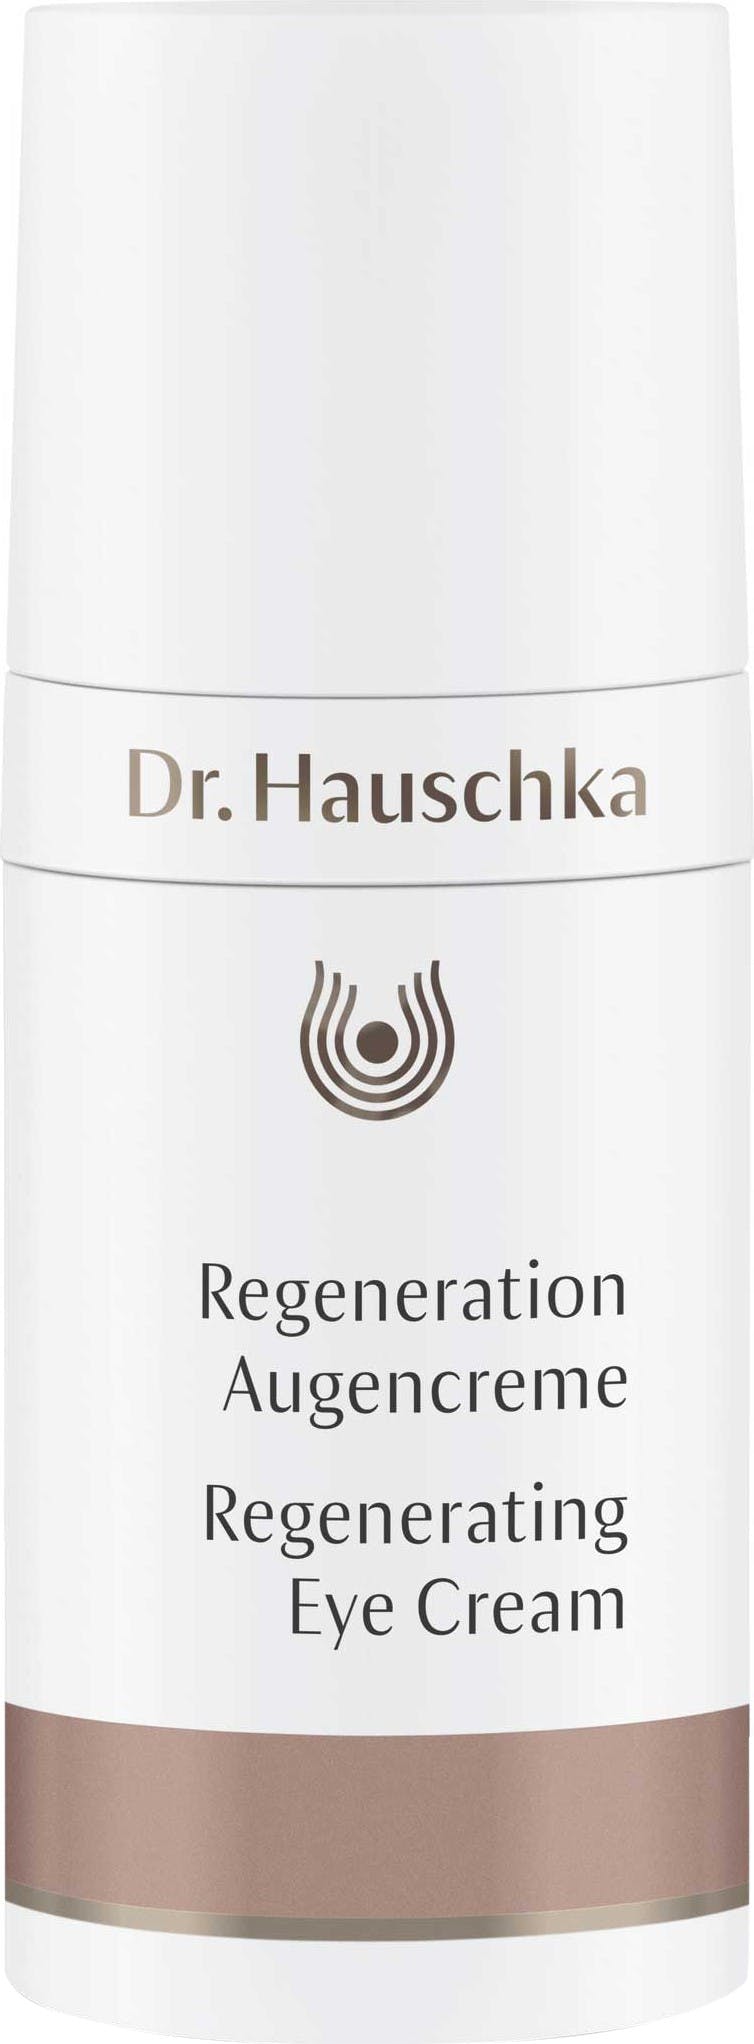 Dr. Hauschka Regenerating Eye Cream - Women's For Her. New. Free Shipping